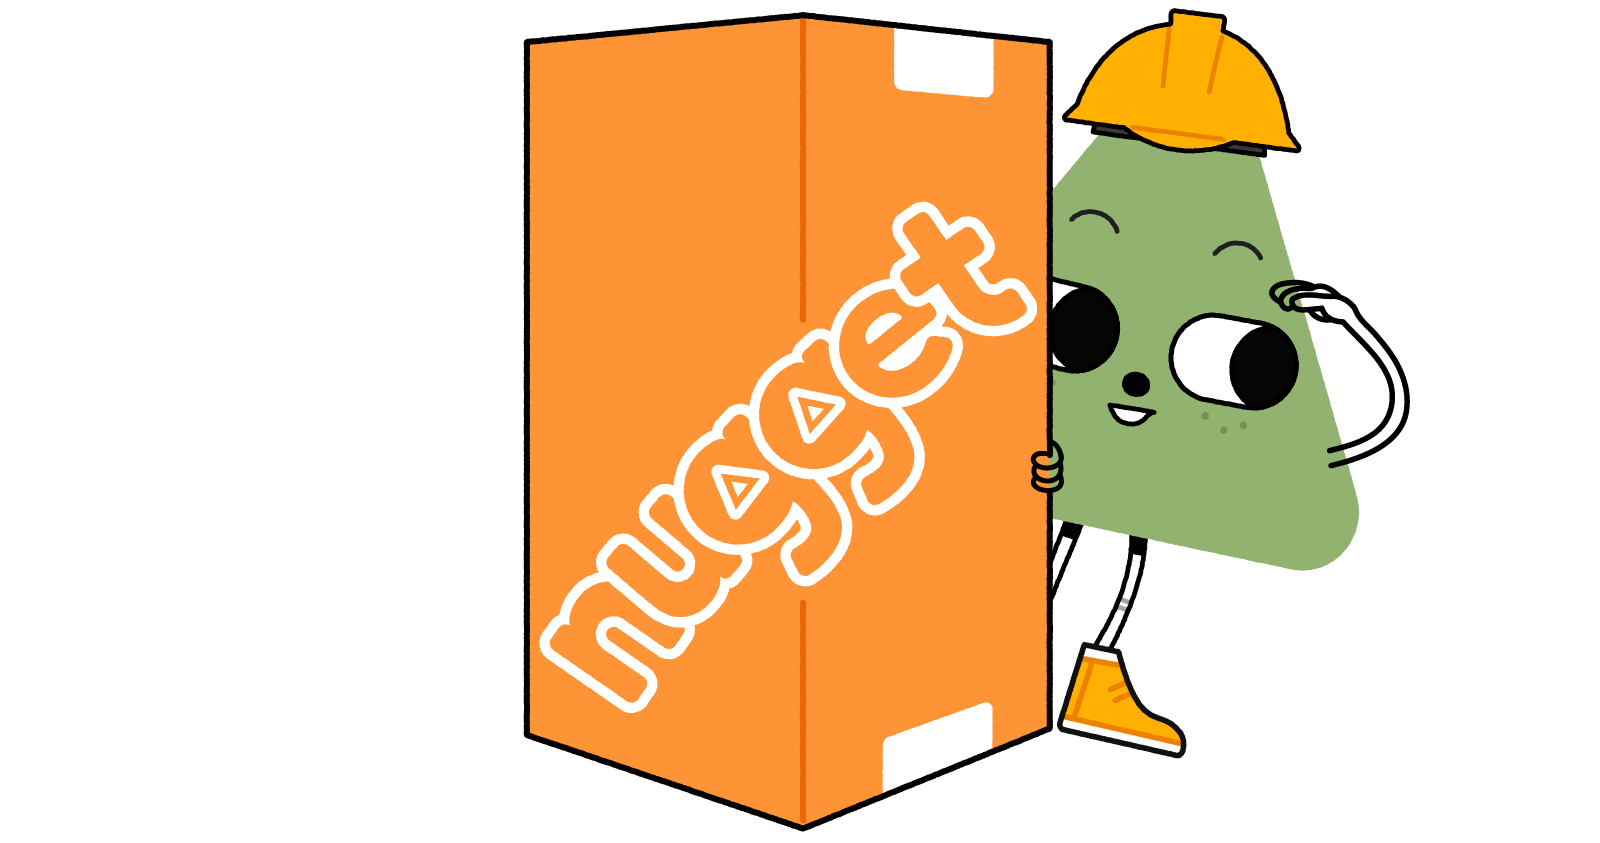 Nugget character wearing a hardhat peering around a Big Orange Box